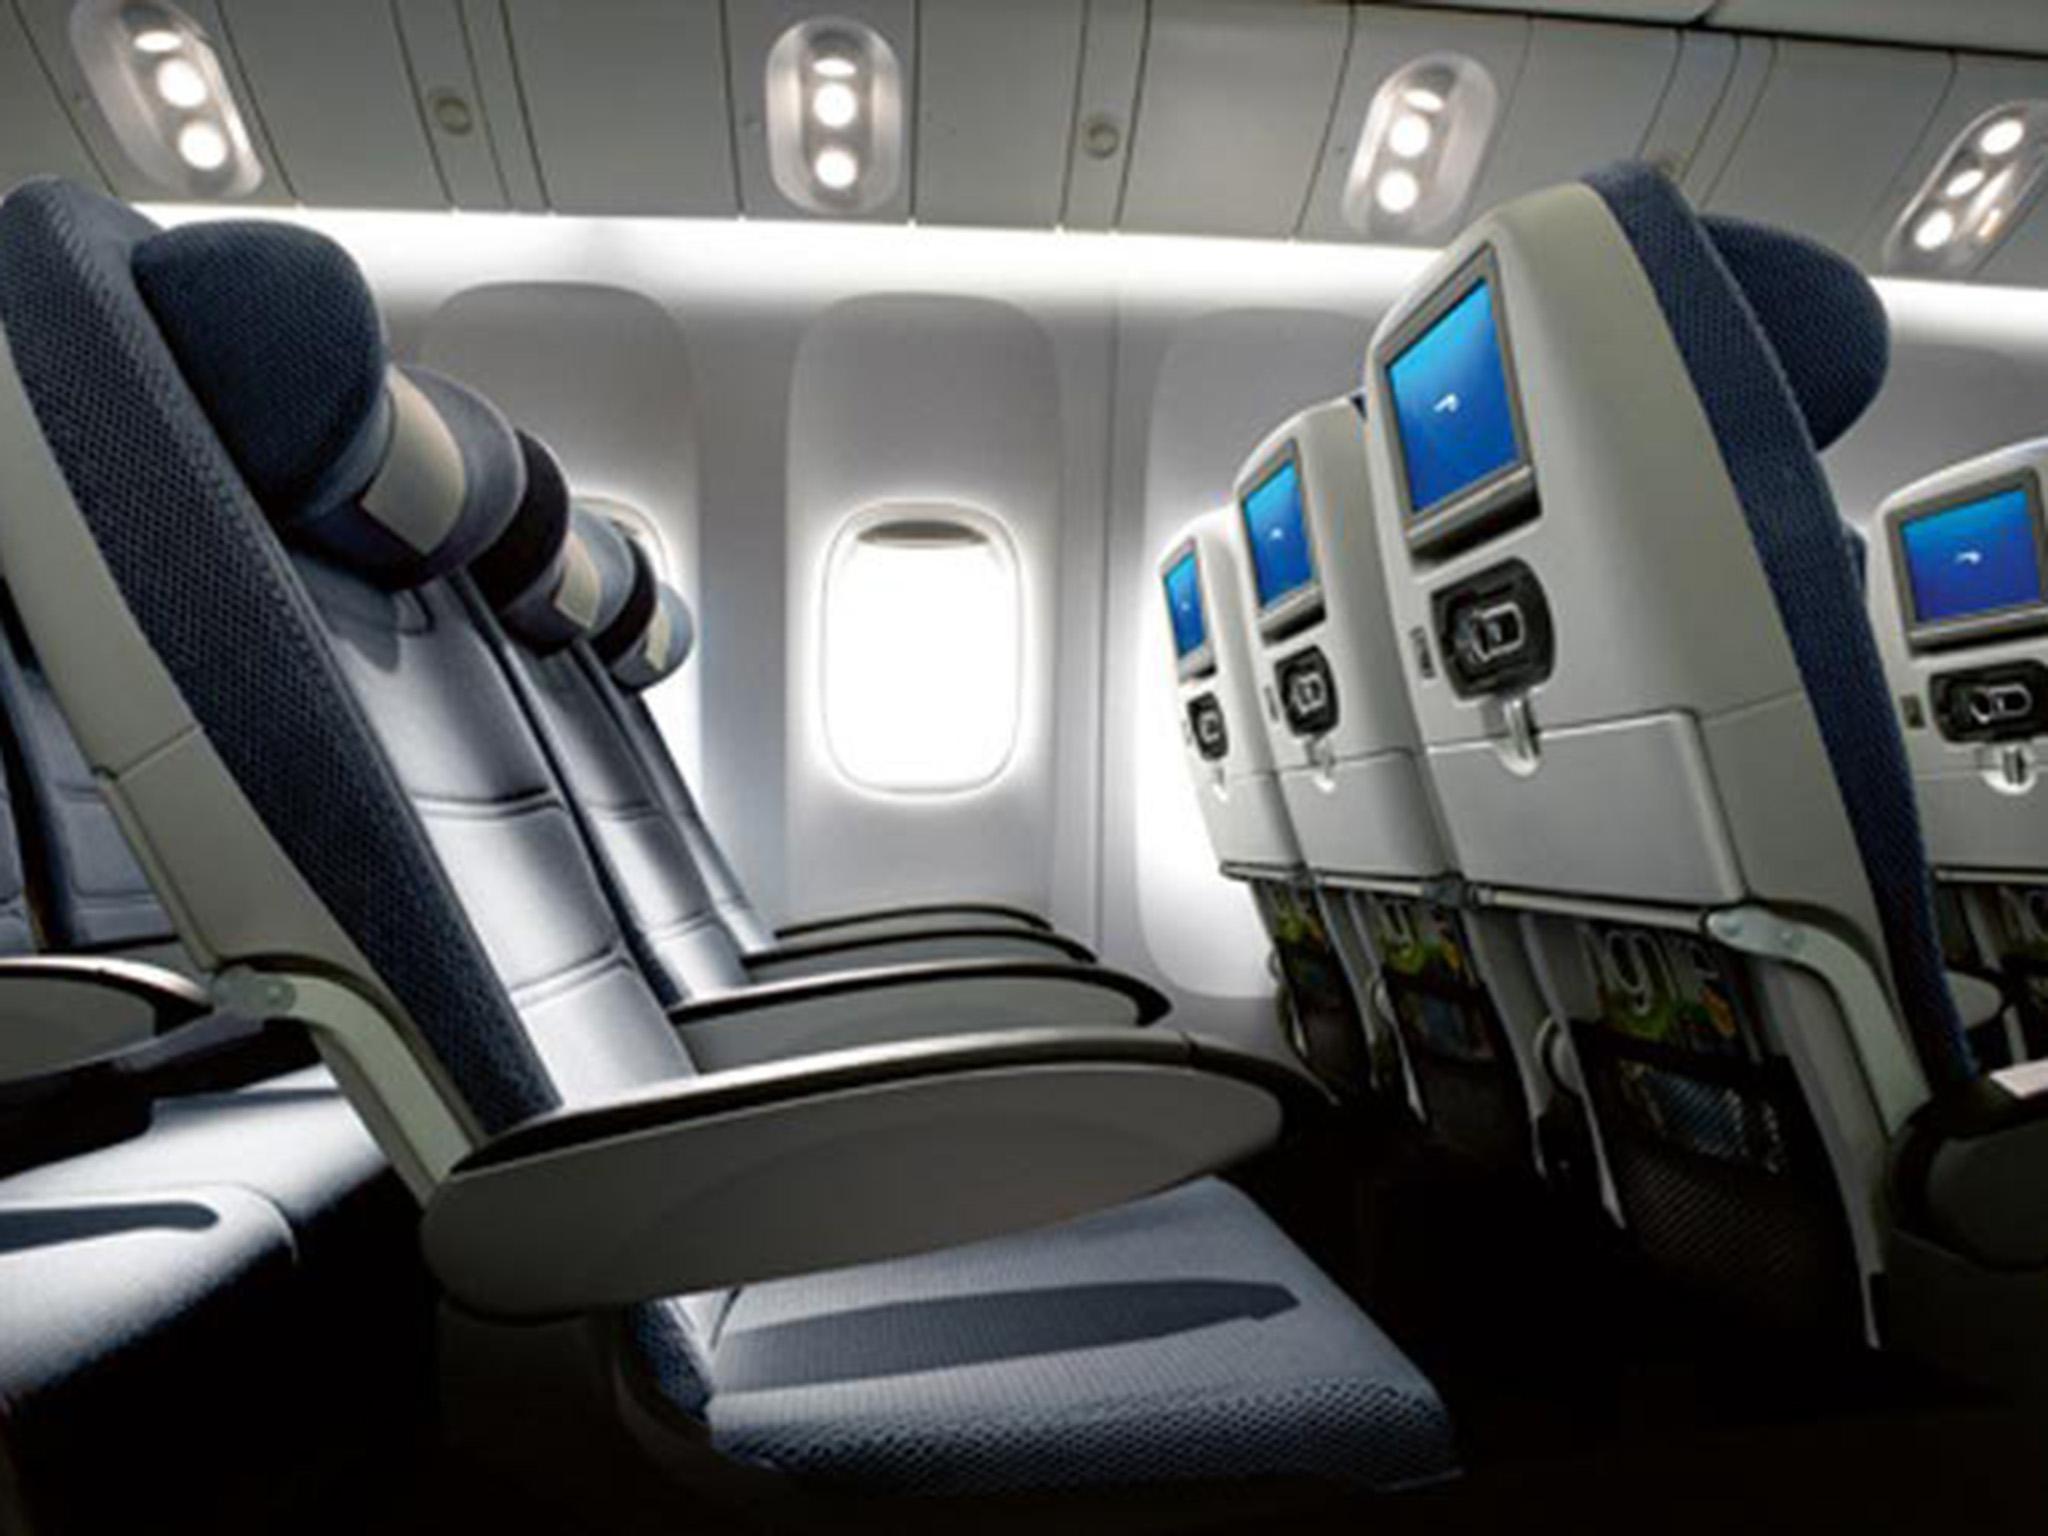 A Row of World Traveller seats